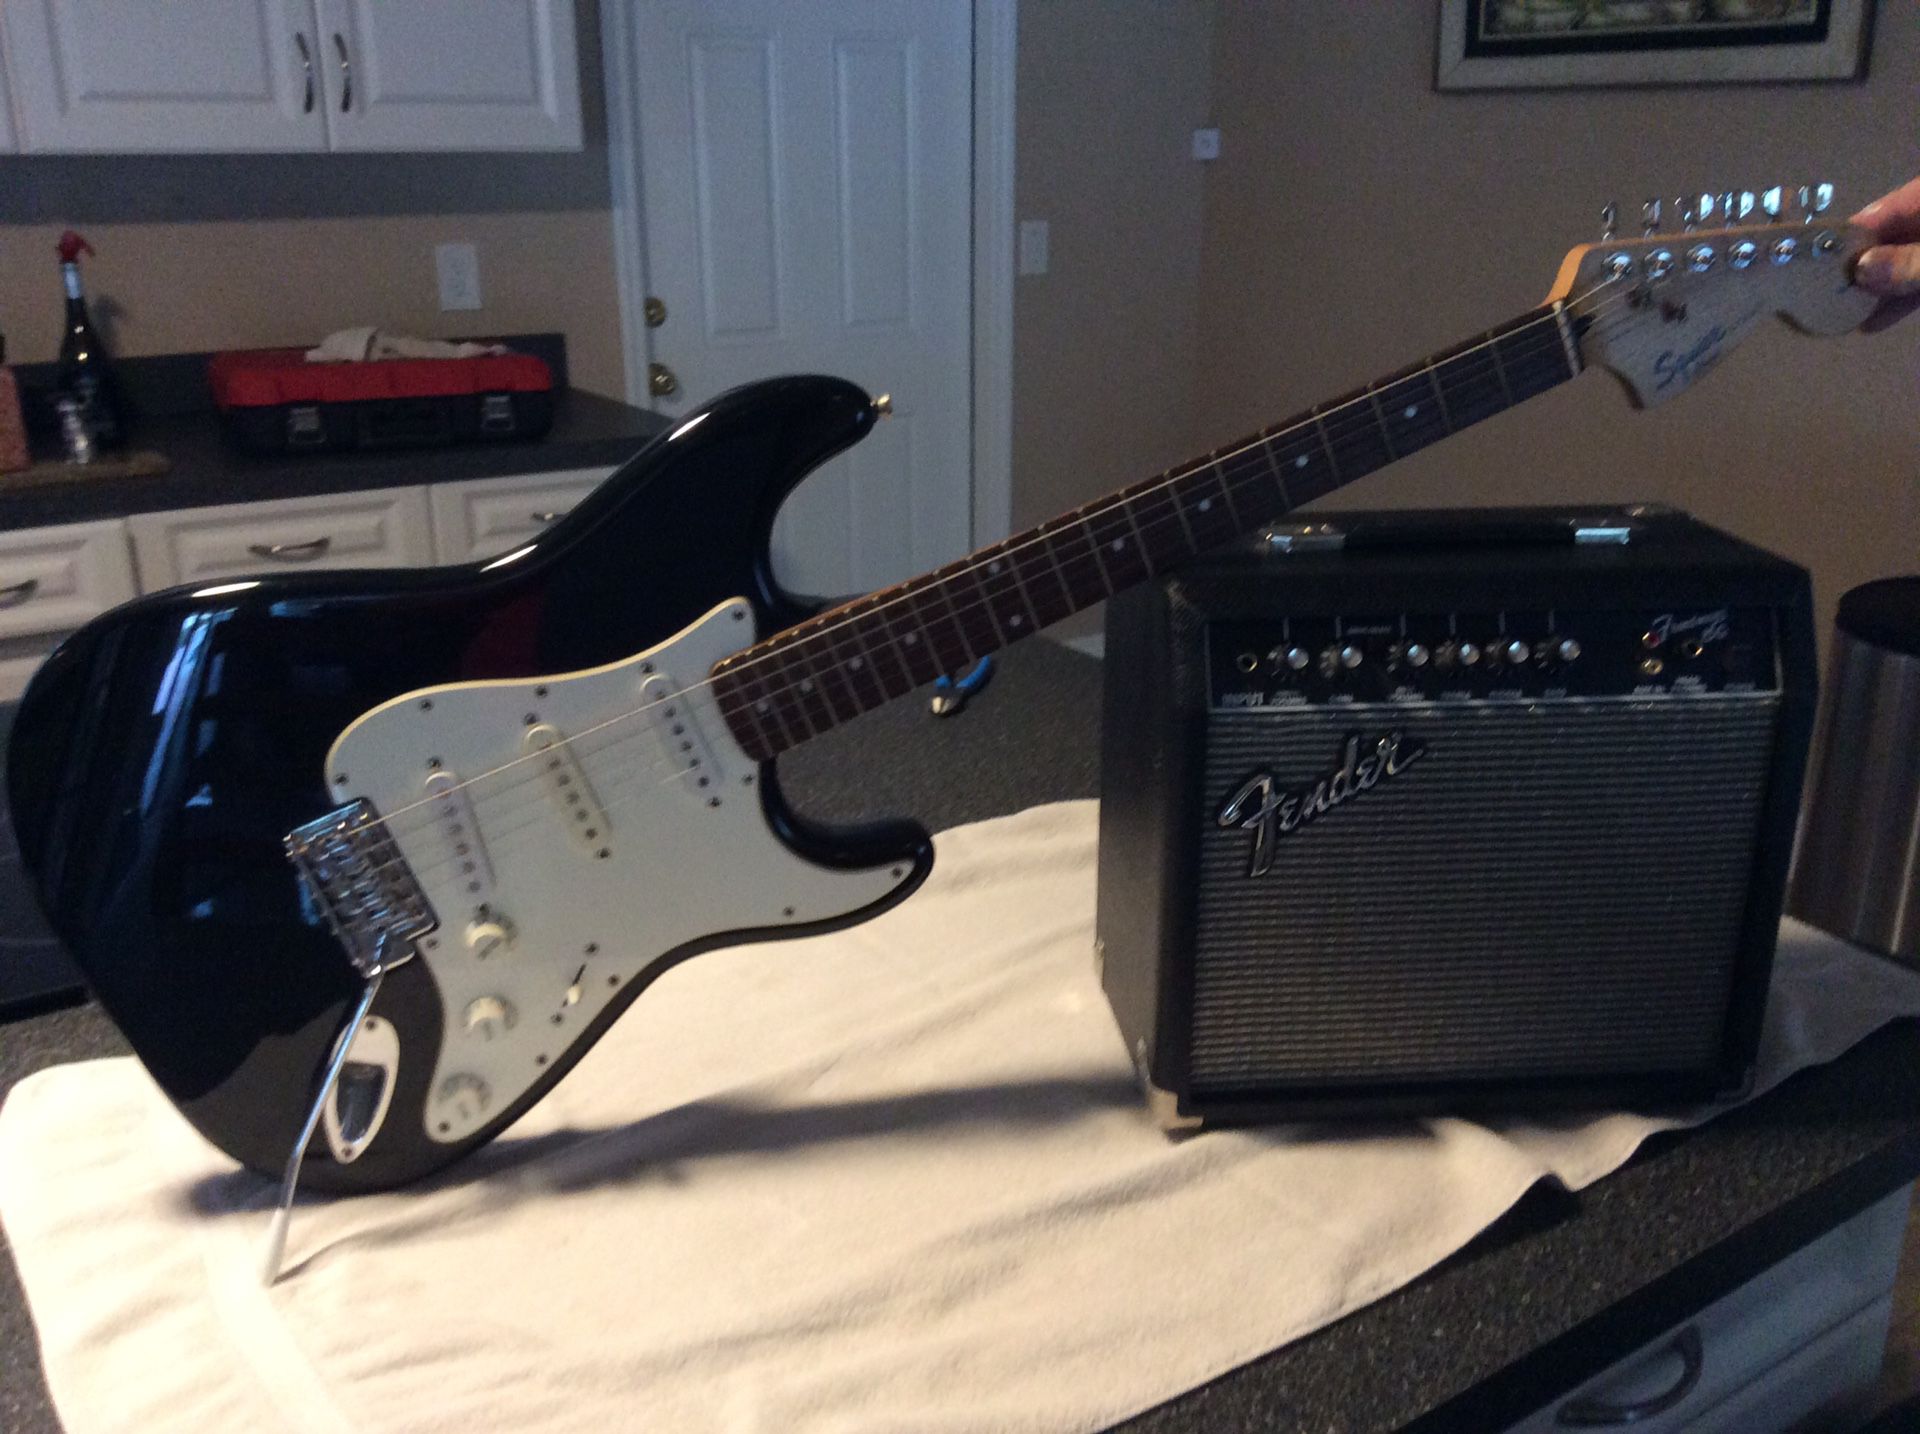 Fender Squier Strat Guitar and Fender Frontman 15G Amp